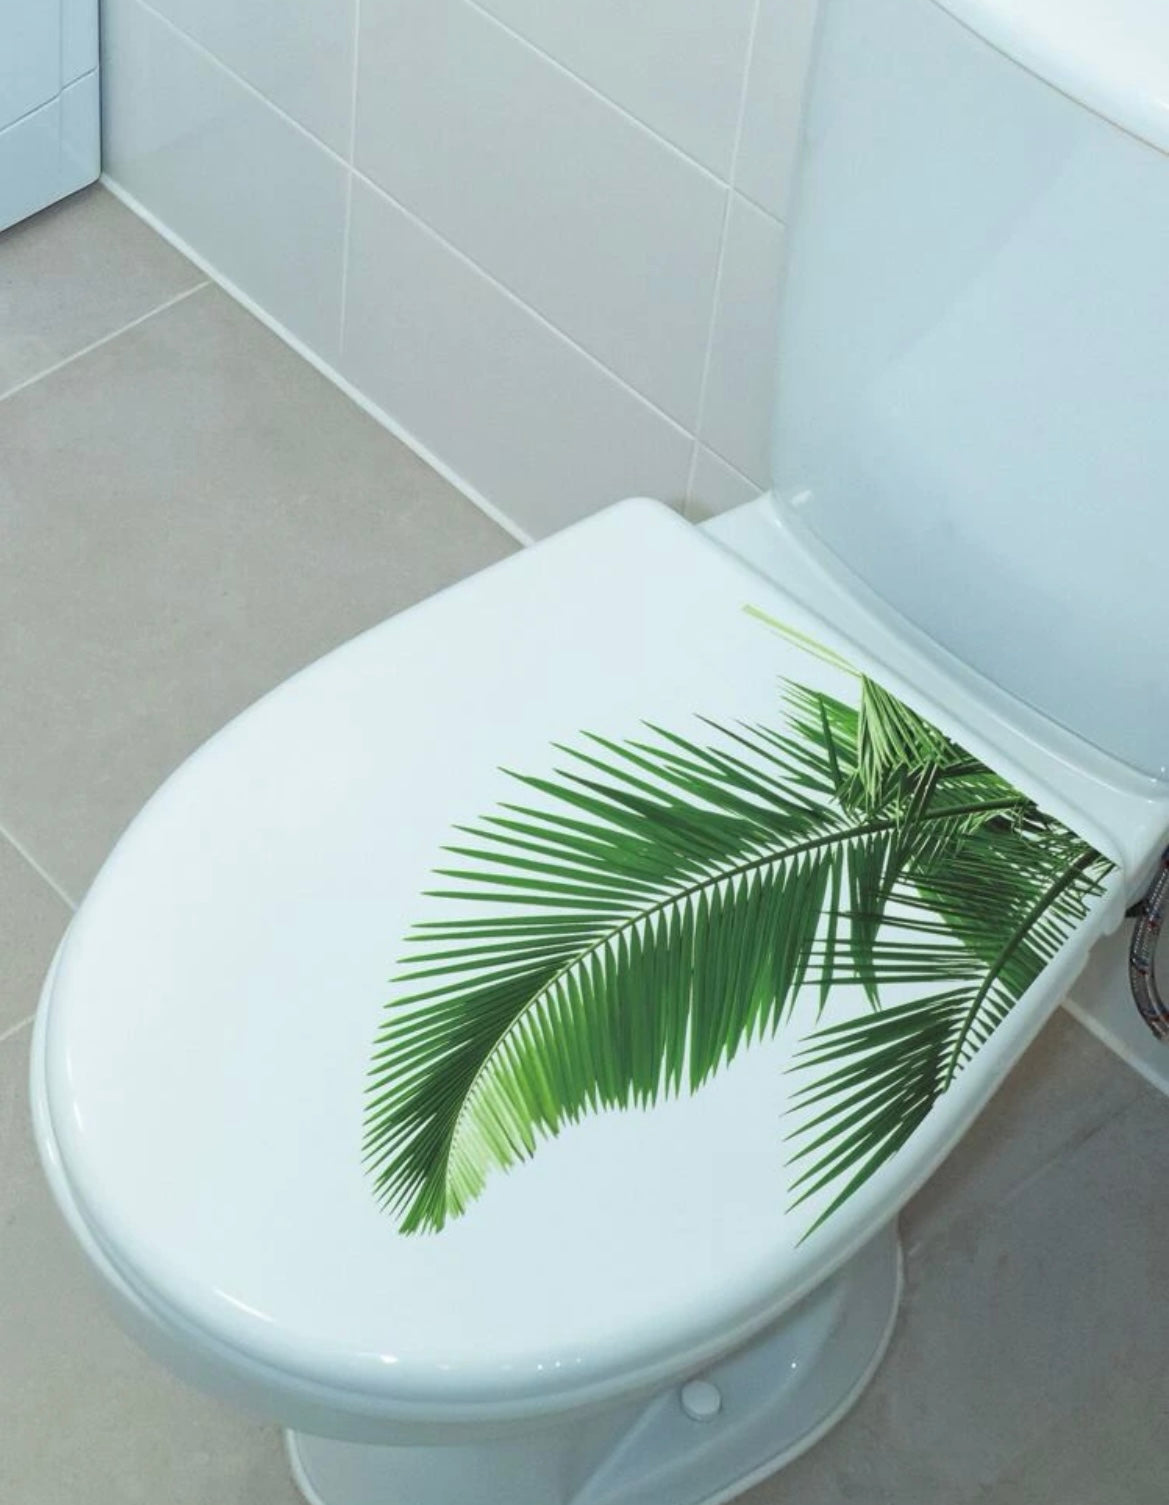 leaf pattern toilet lid decal